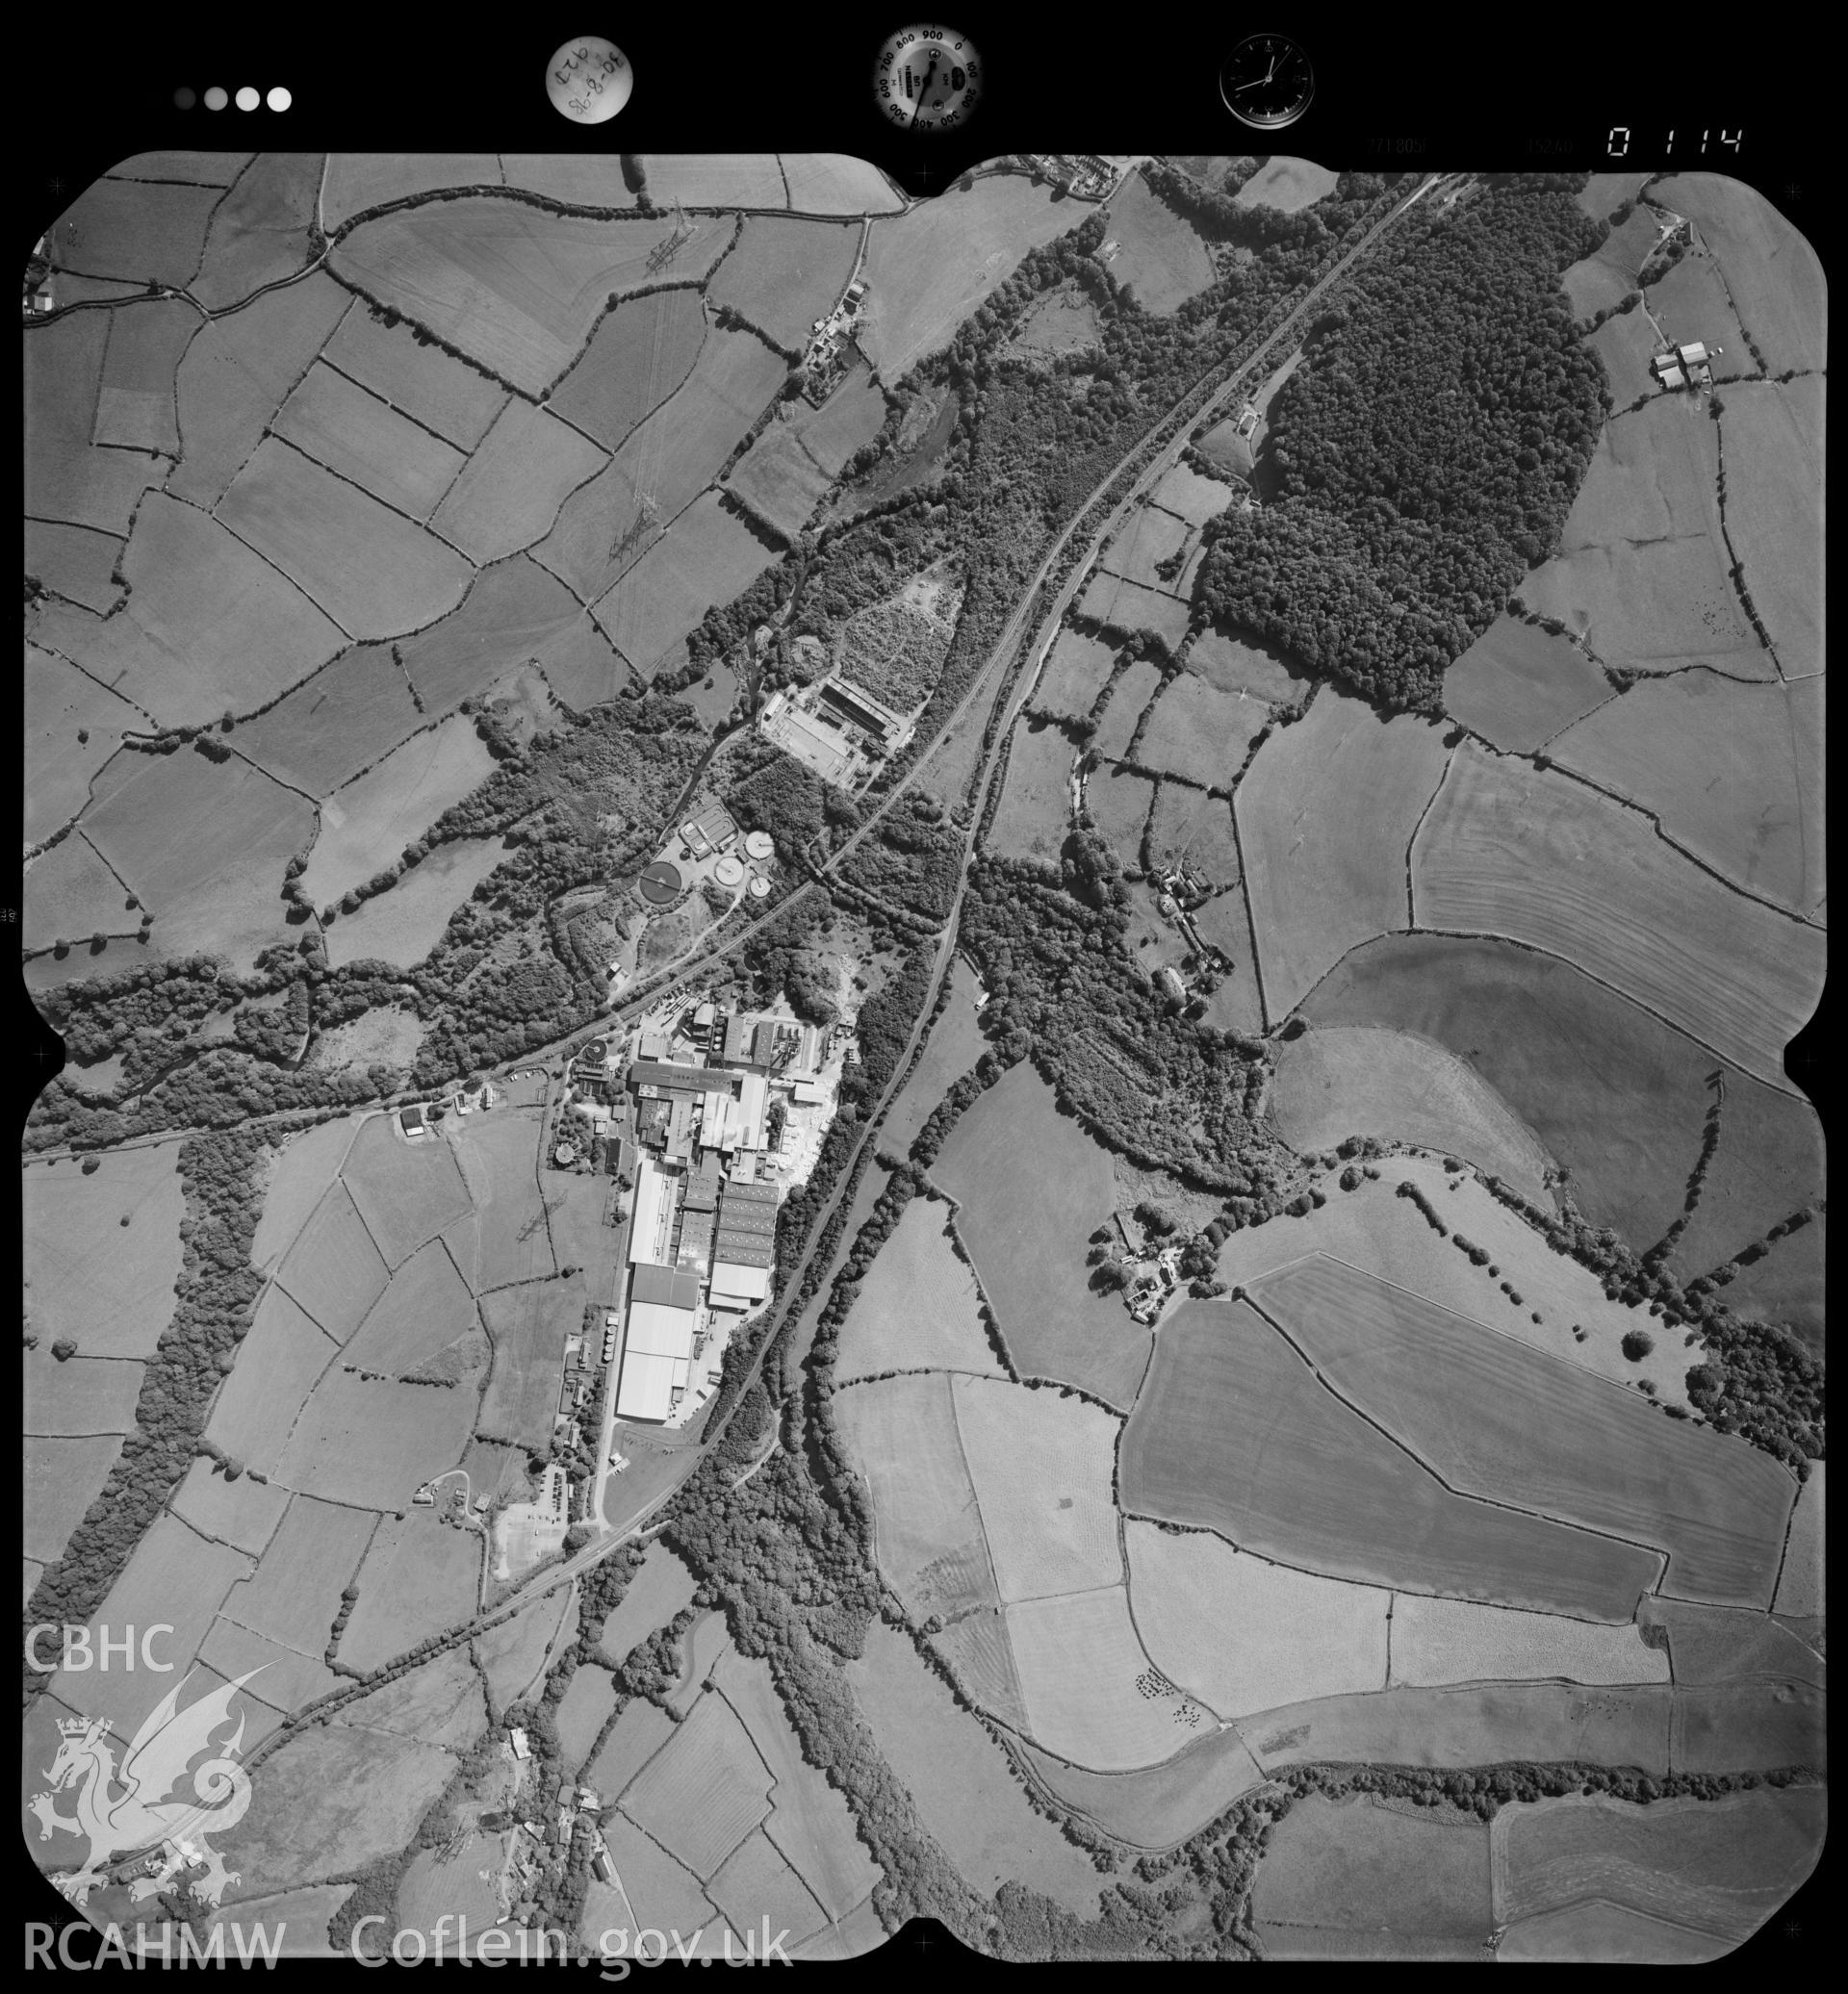 Digitized copy of an aerial photograph showing Bridgend Paper Mill, taken by Ordnance Survey, 1998.